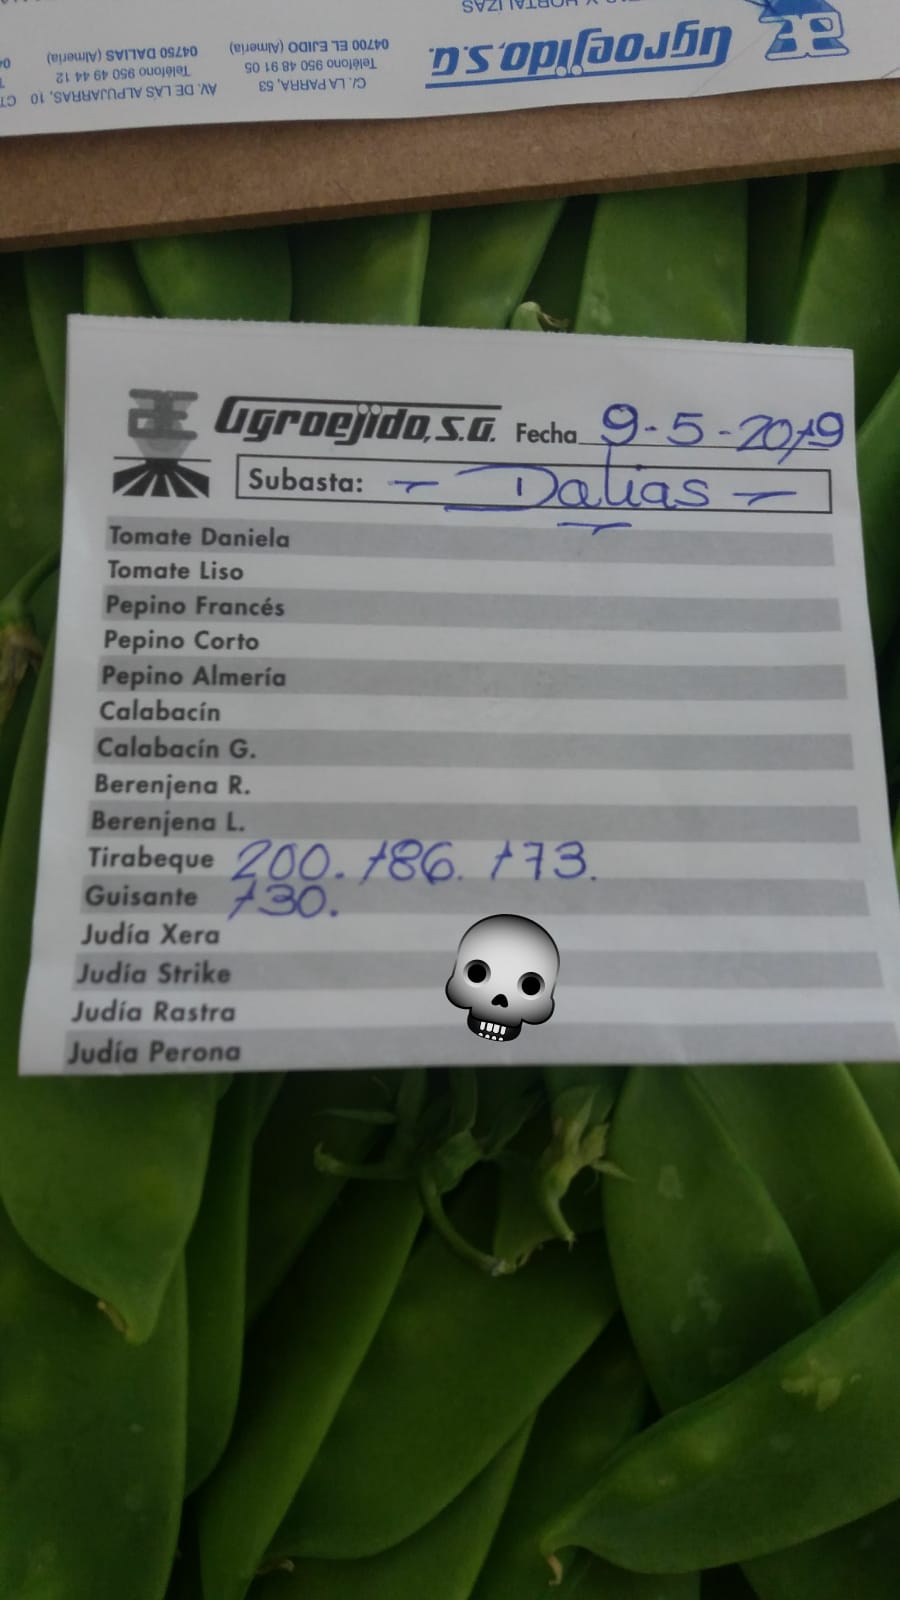 Subasta hortofruticola AgroEjido Dalias 9 de Mayo